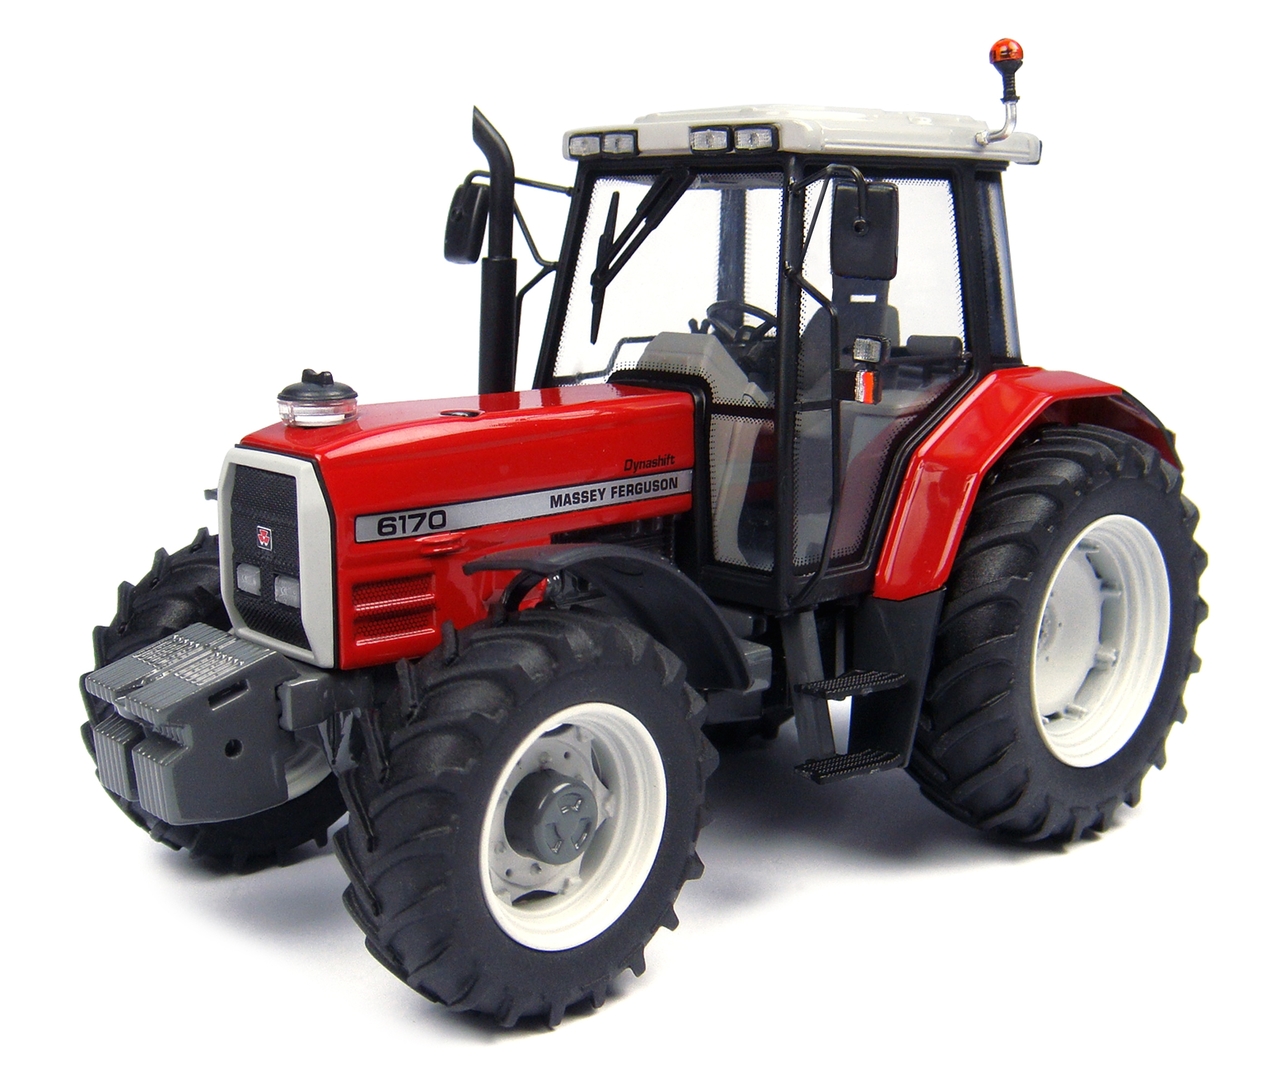 Massey Ferguson 6170 Tractor 1/32 Diecast Model By Universal Hobbies